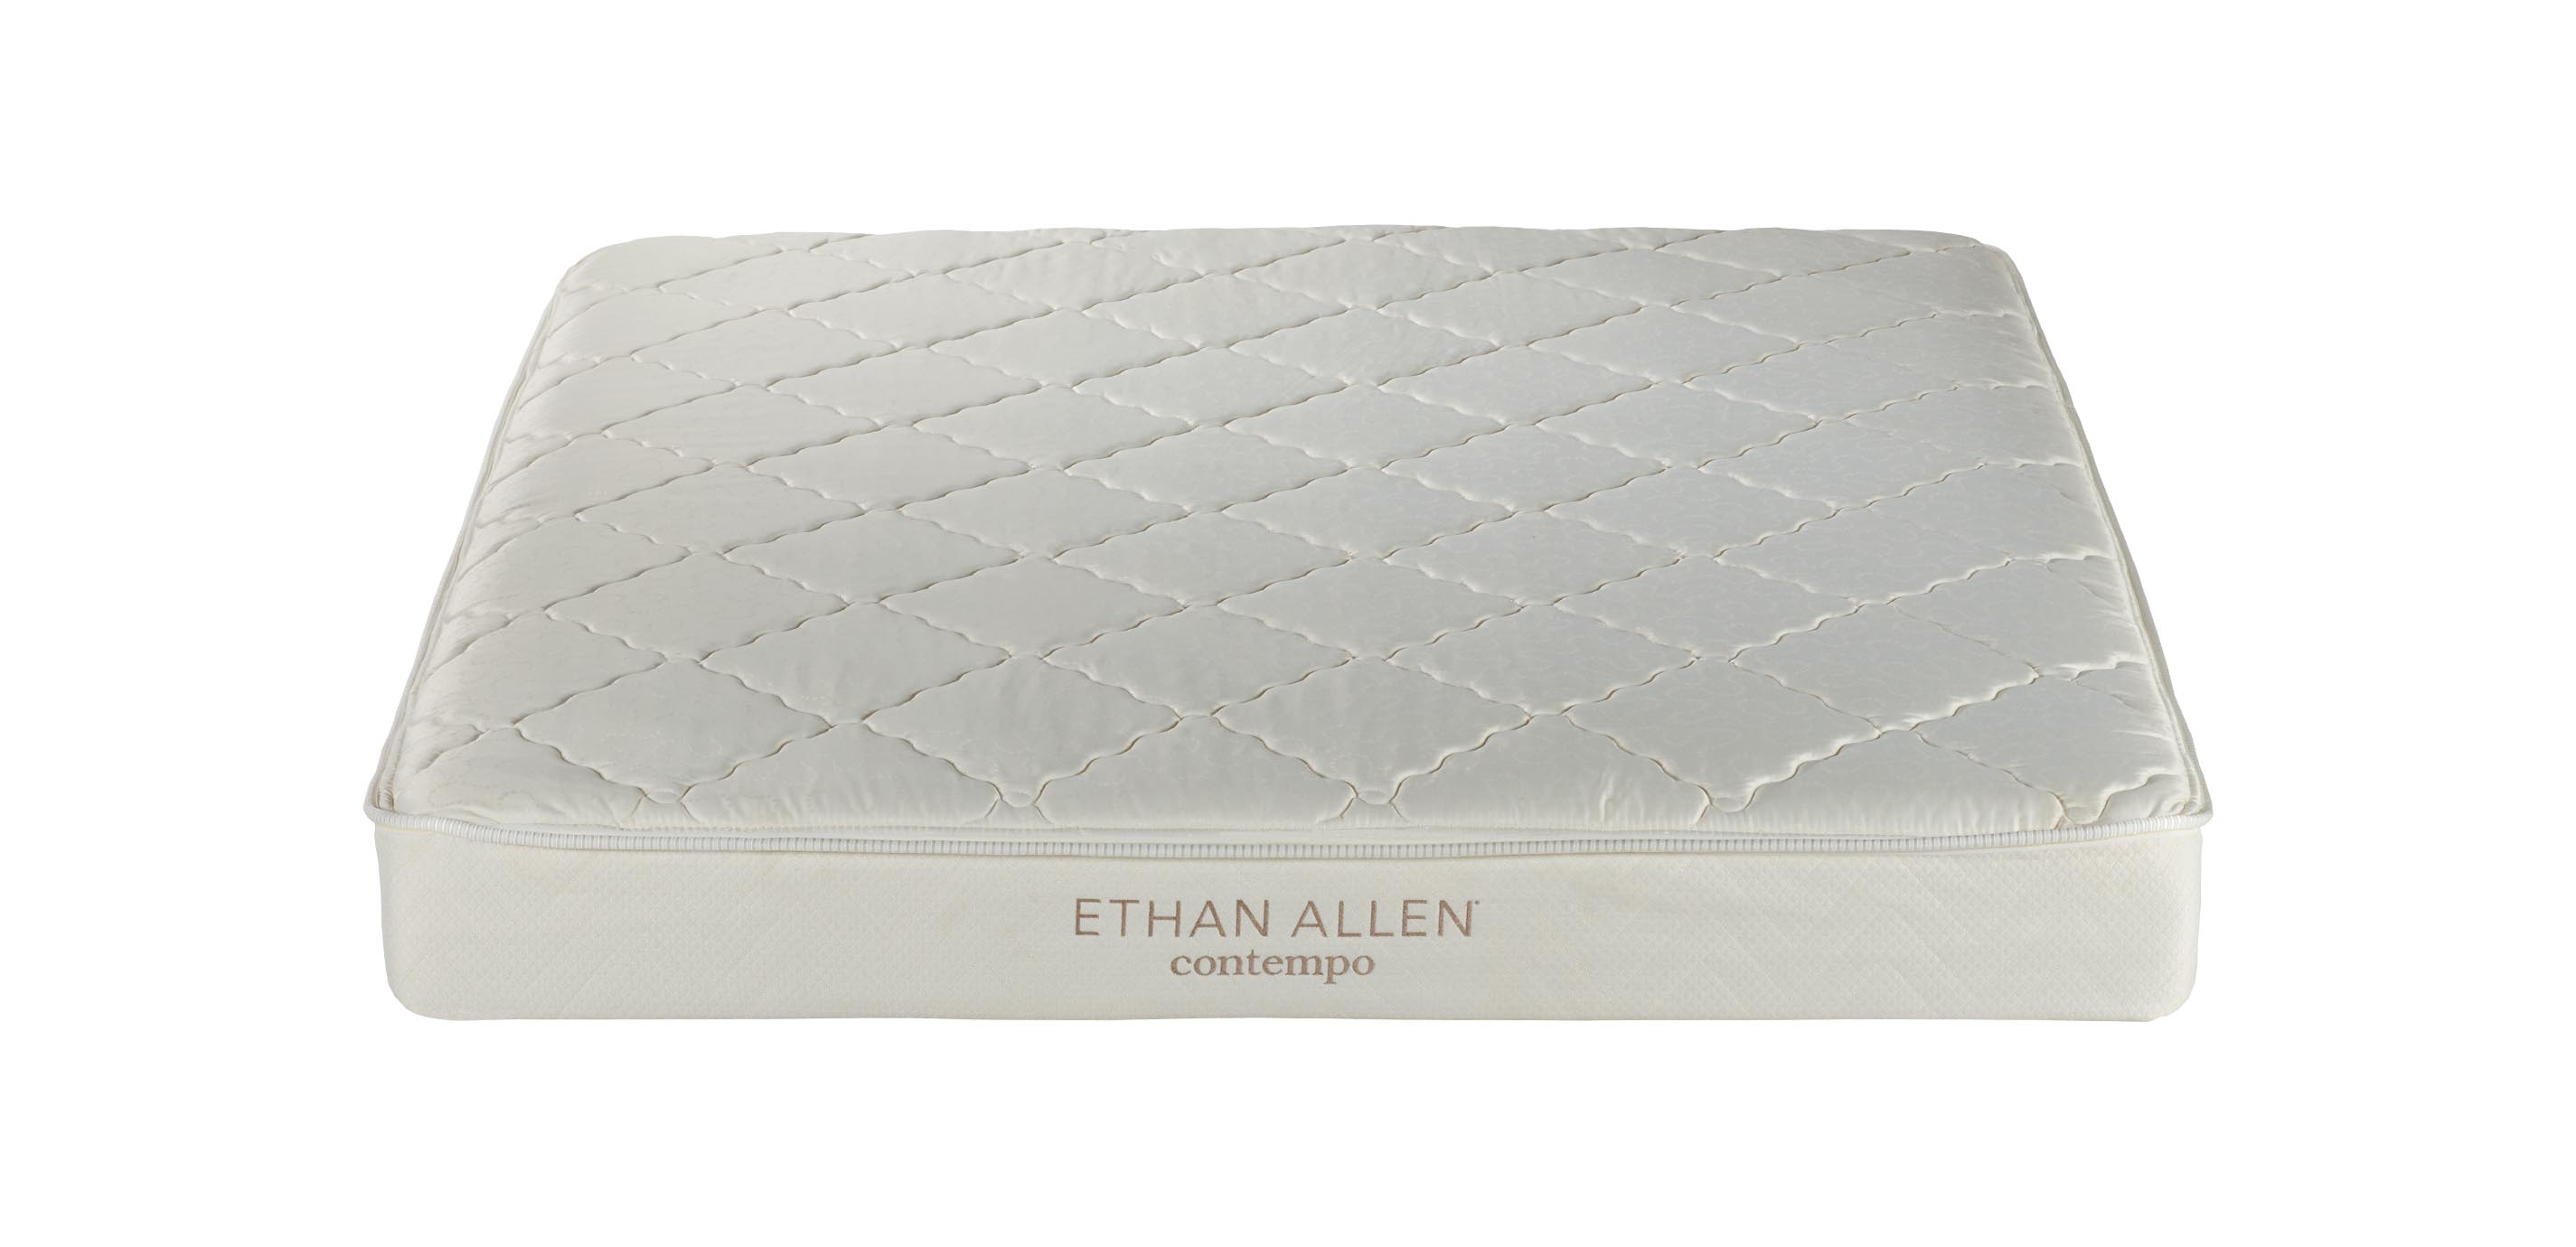 contempo exquisite mattress reviews